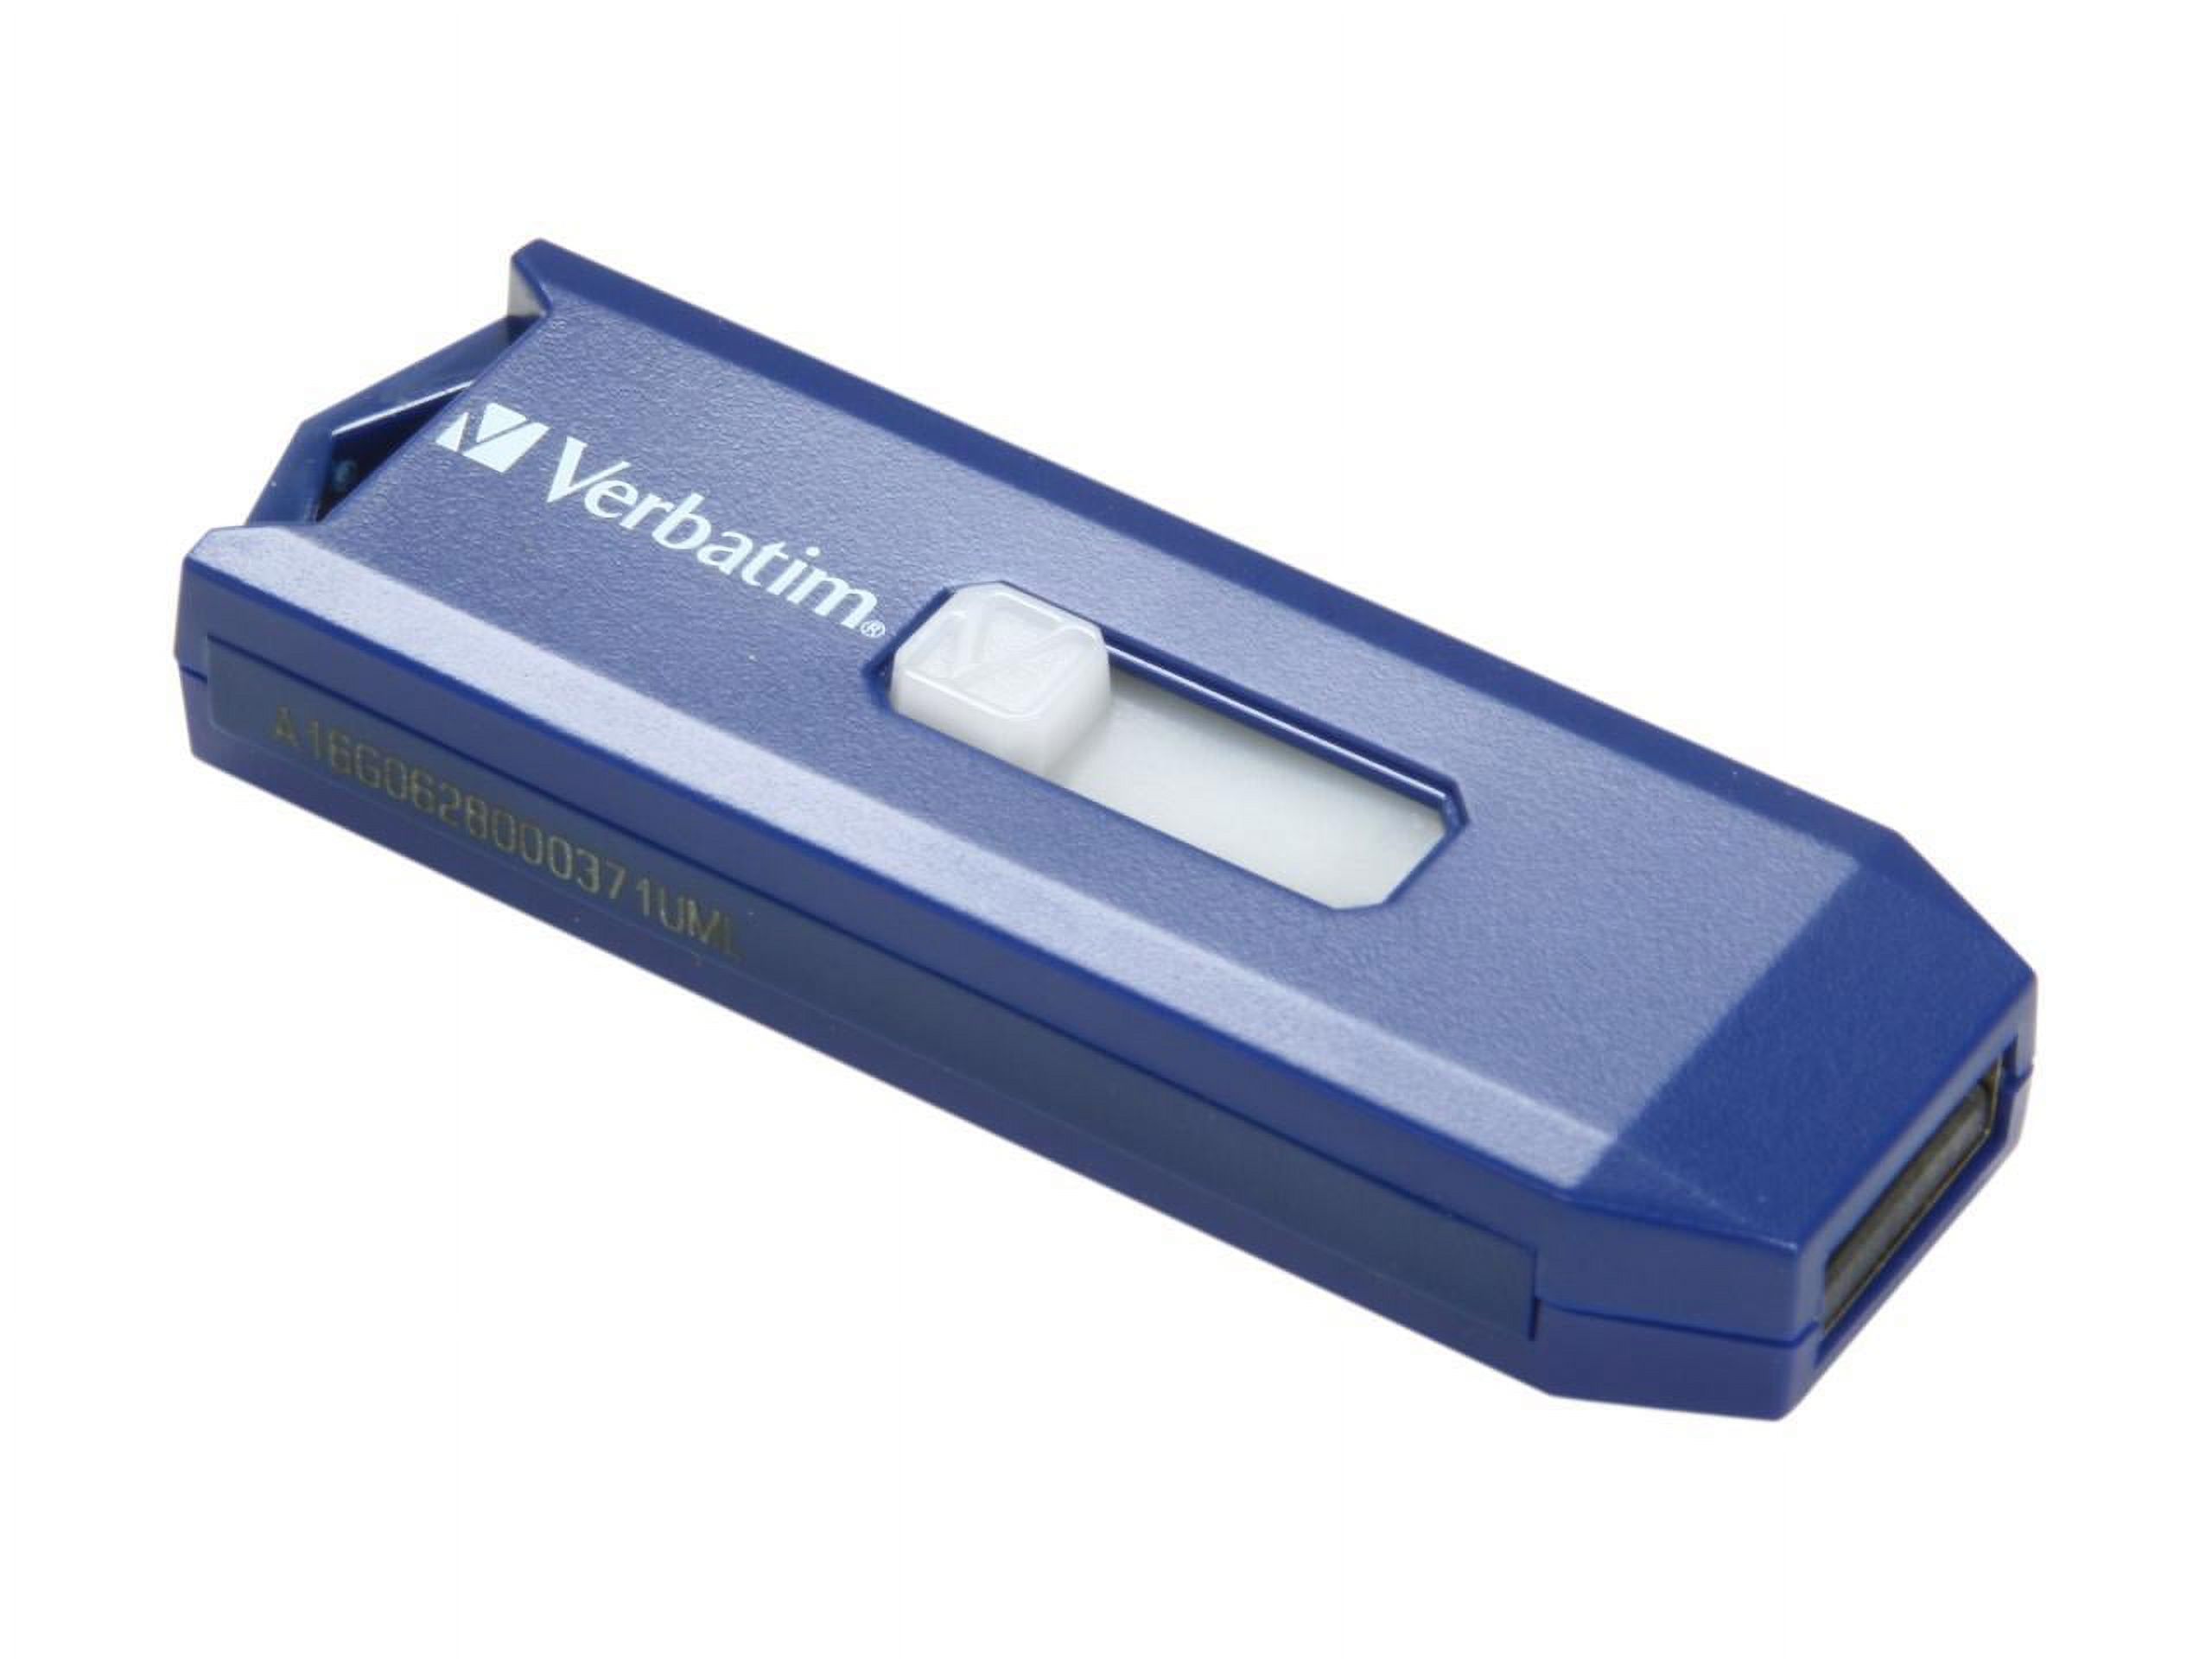 Verbatim Smart 16GB USB 2.0 Flash Drive Model 97275 - image 1 of 6